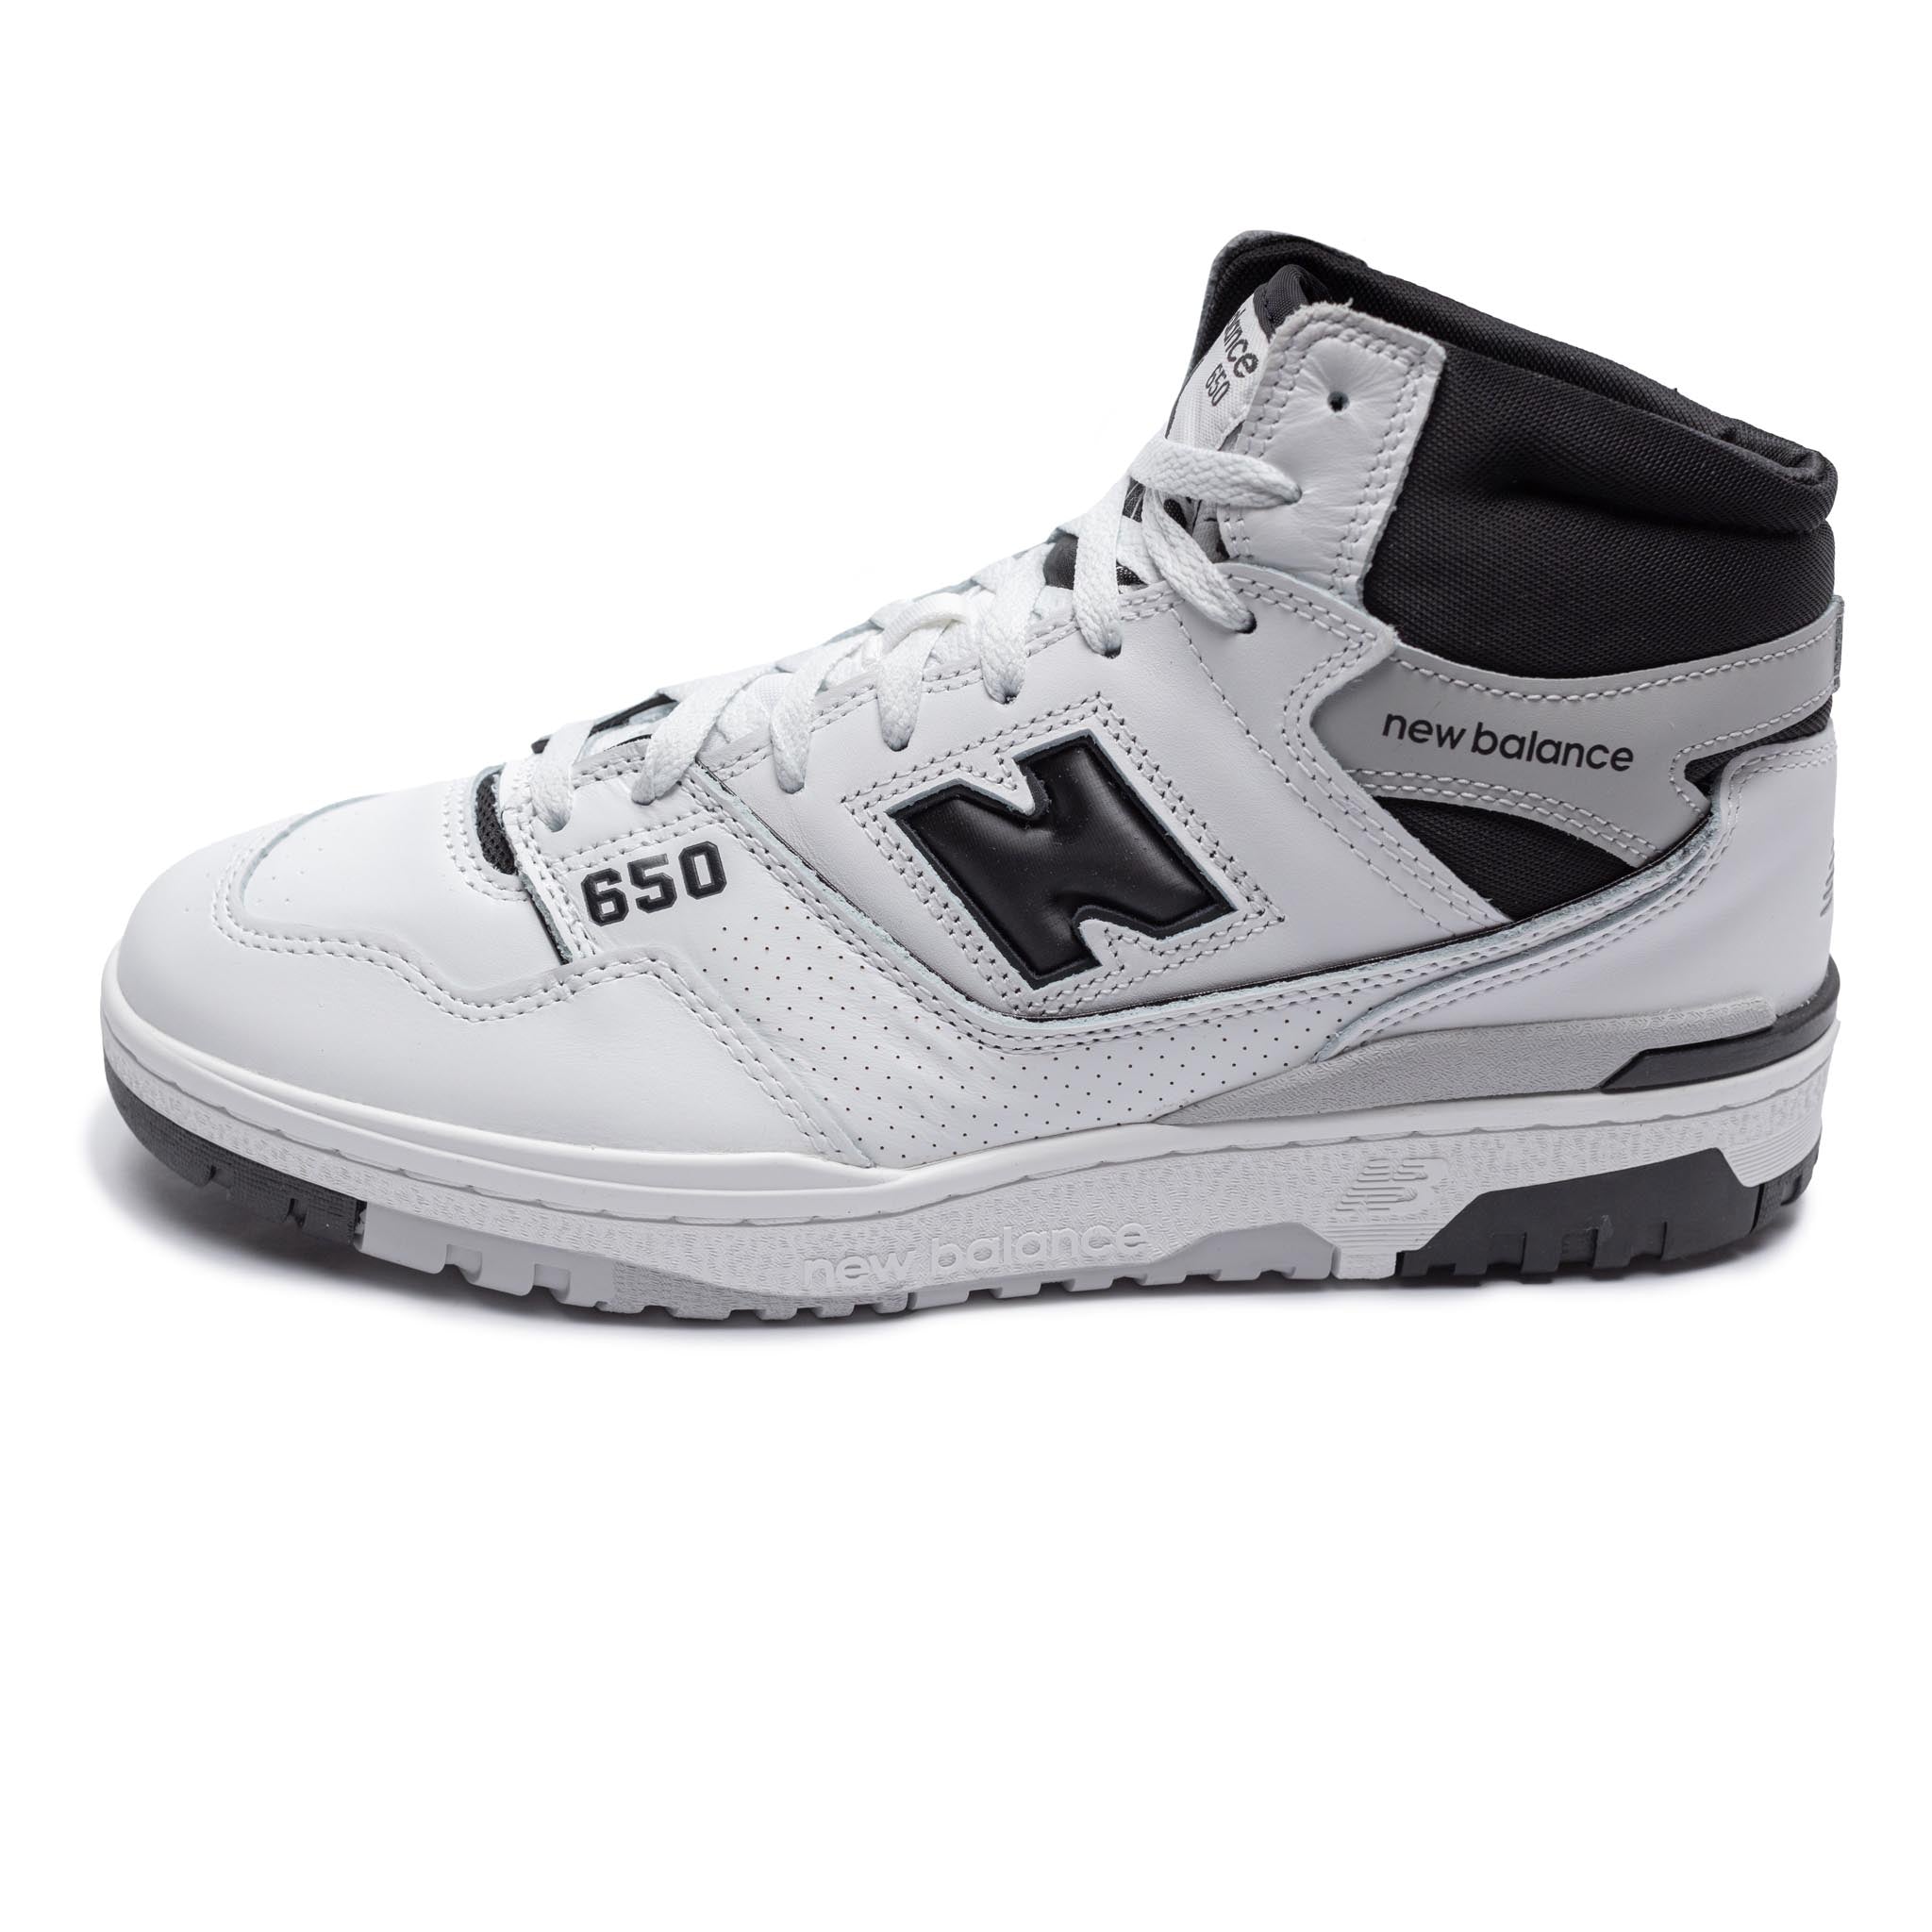 New Balance BB650RCE White/Black